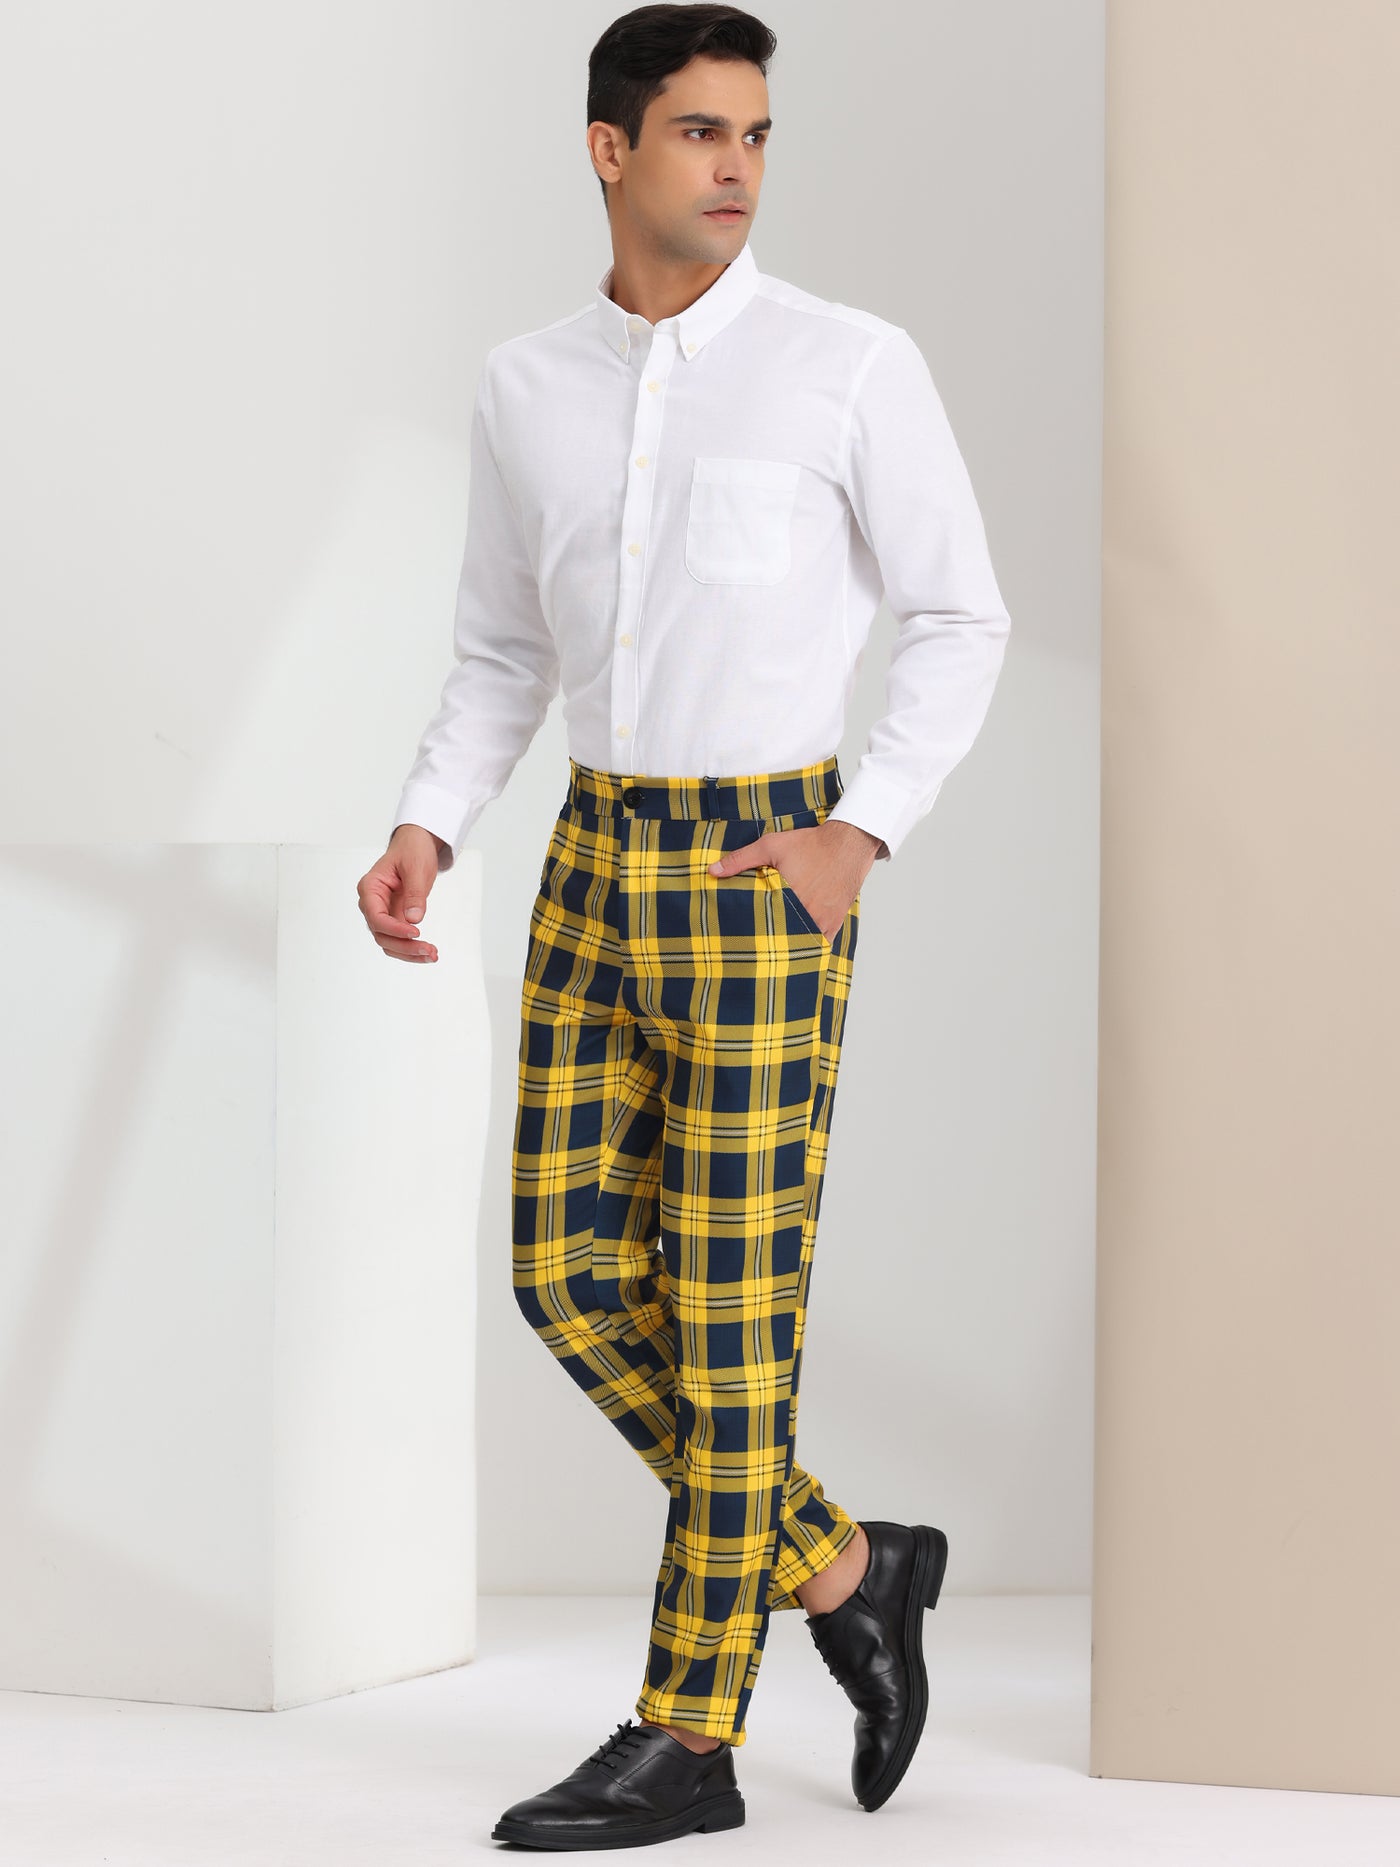 Bublédon Men's Business Plaid Lightweight Regular Fit Flat Front Checked Pants